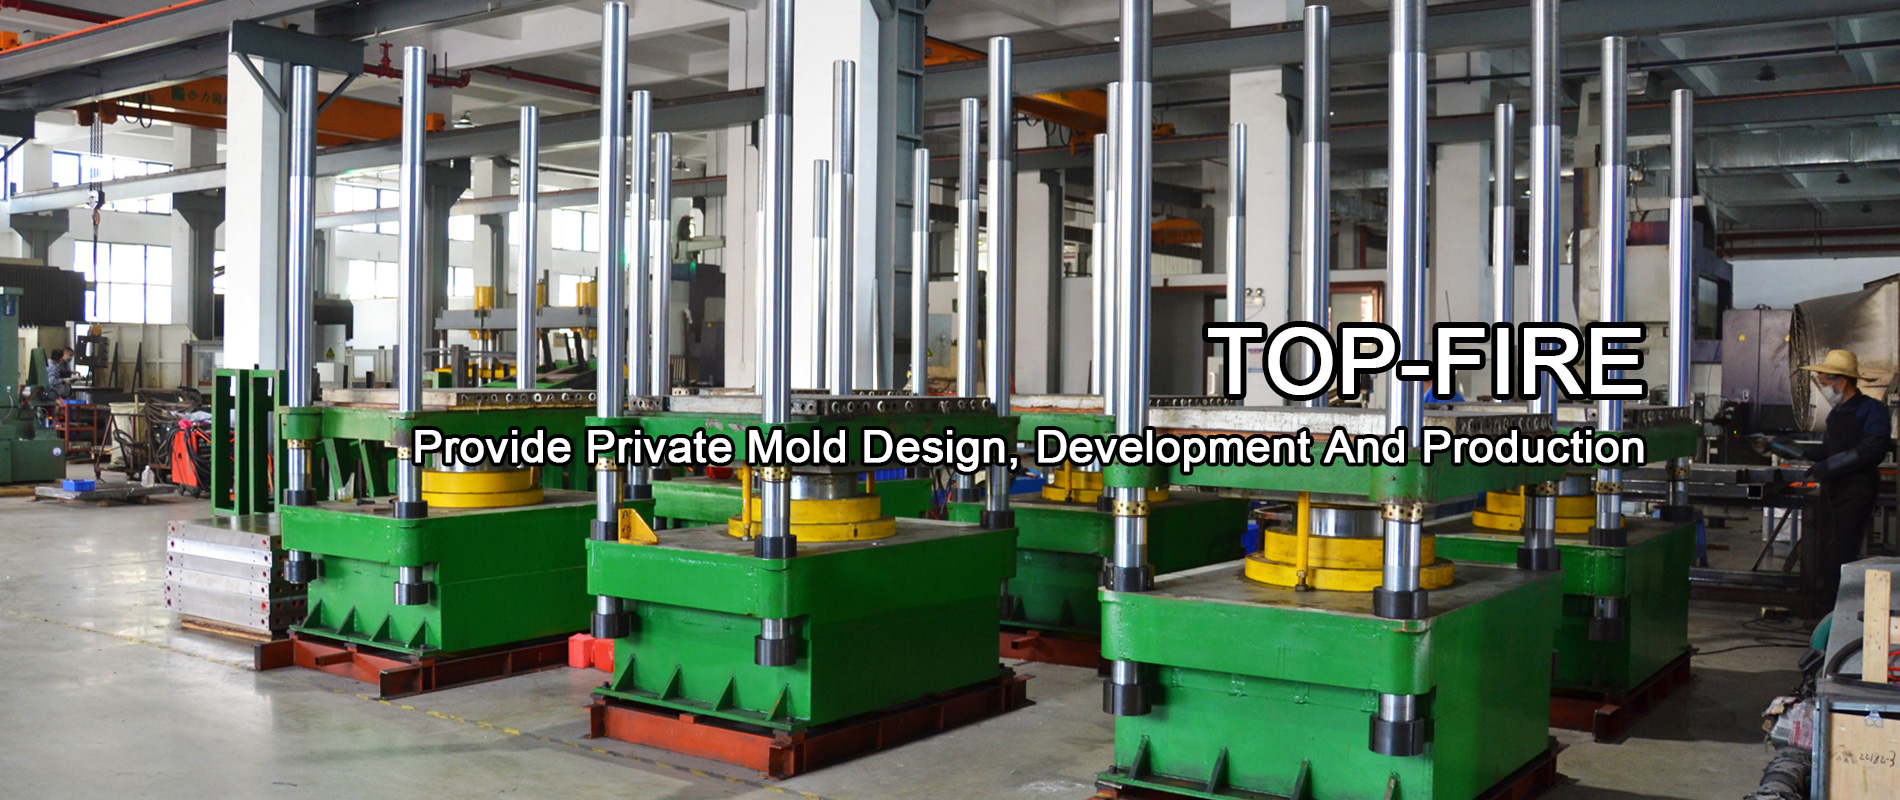 Provide private mold design, development and production